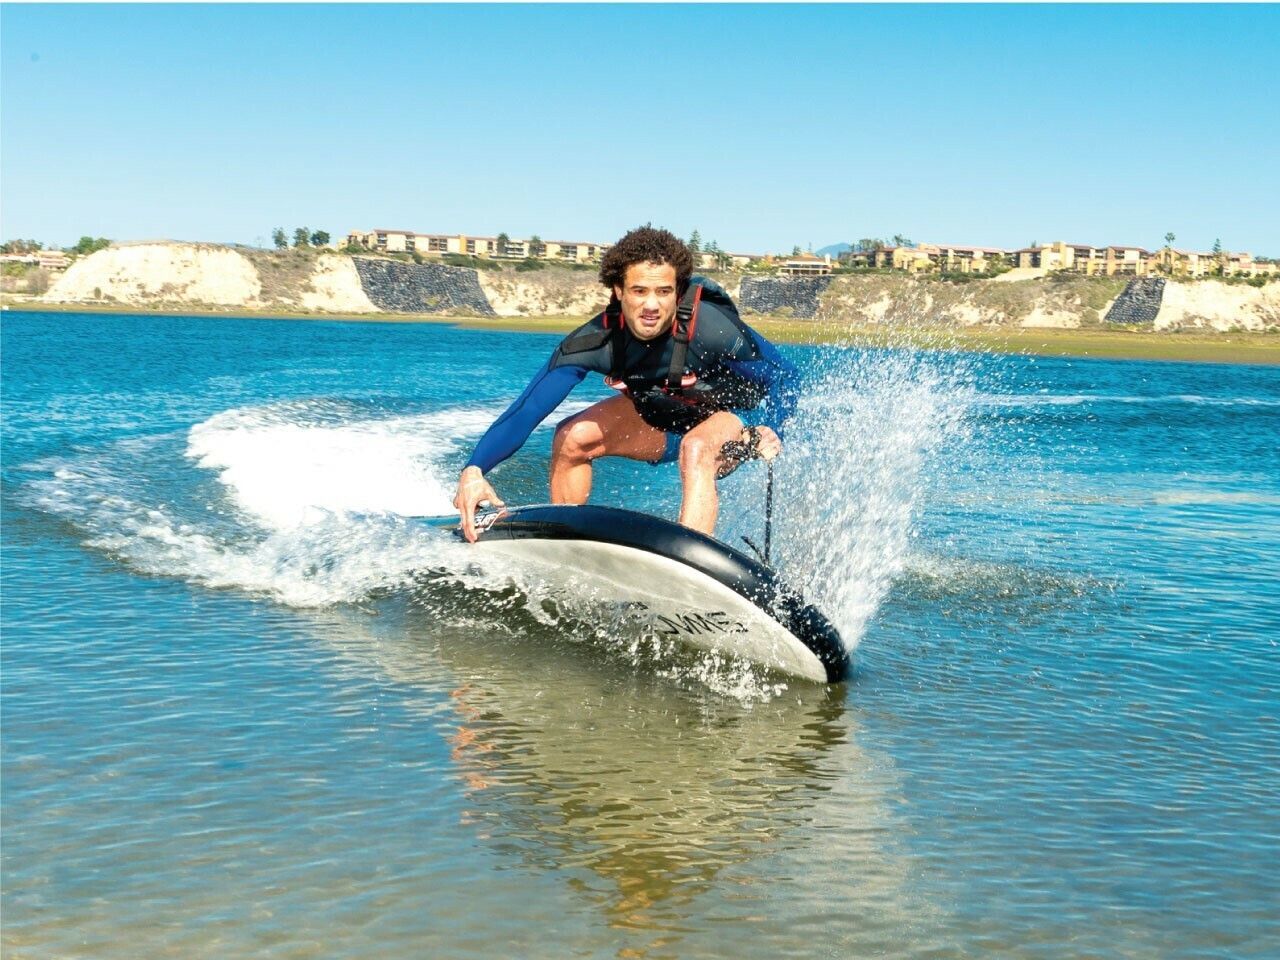 Mertek S1 Inflatable Electric Surfboard